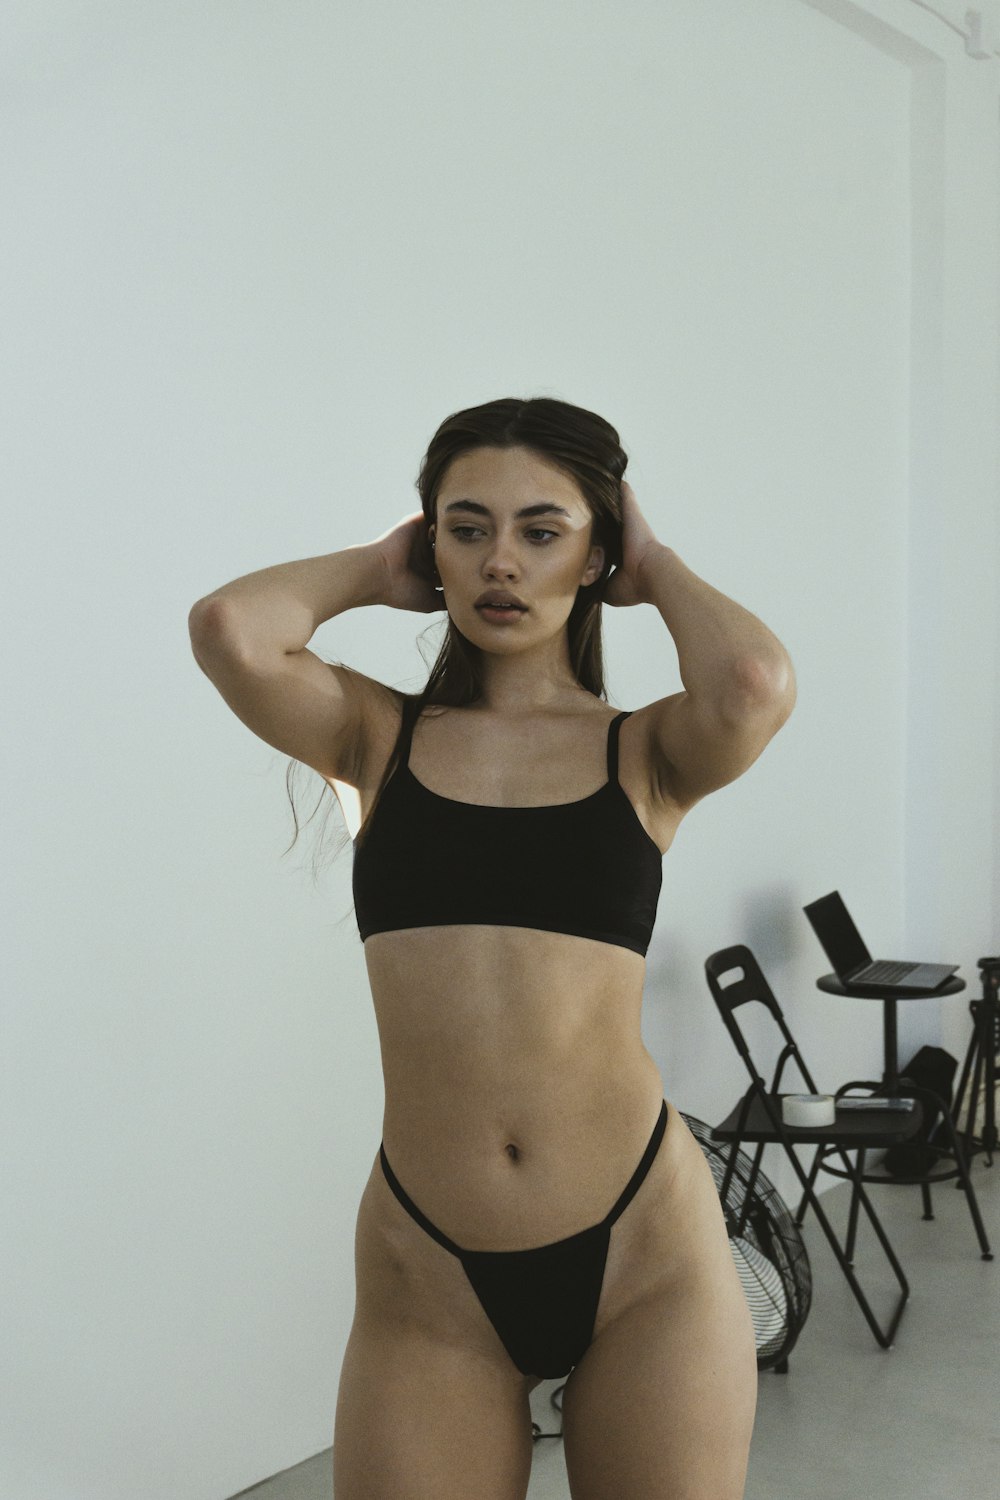 a woman in a black bikini standing in a room